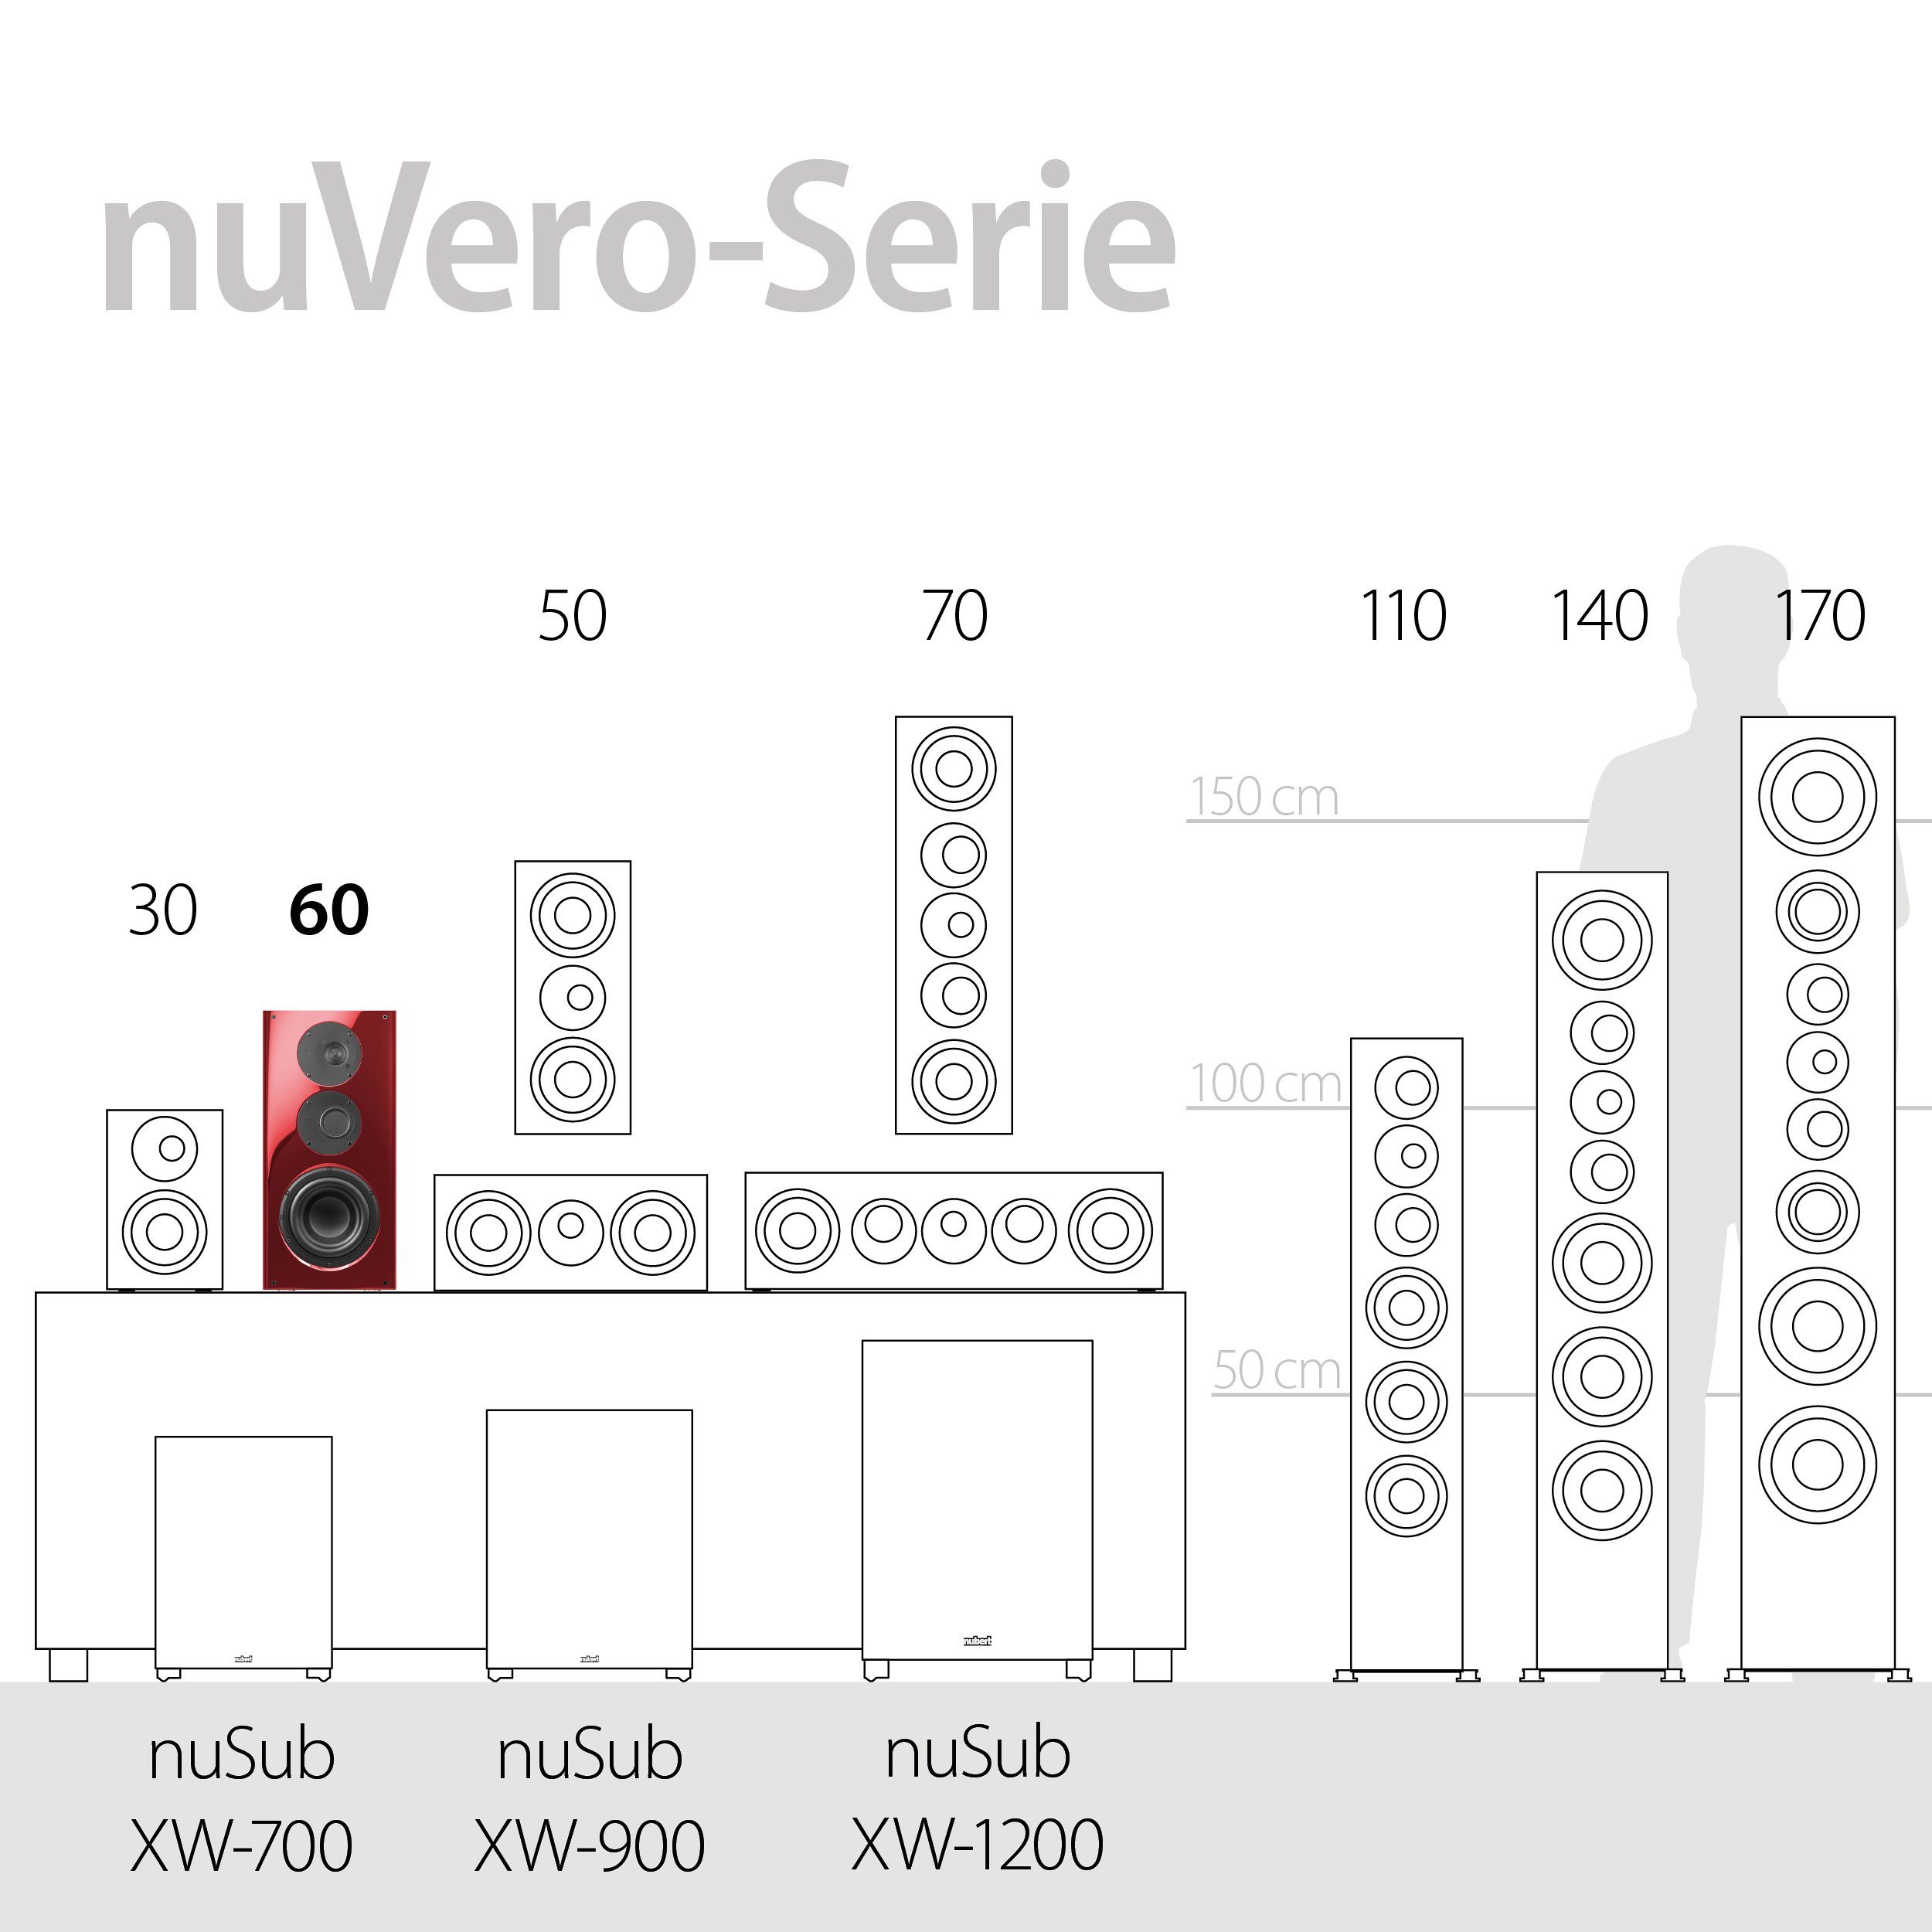 Regal-Lautsprecher 60 nuVero Rubinrot Nubert W) (250